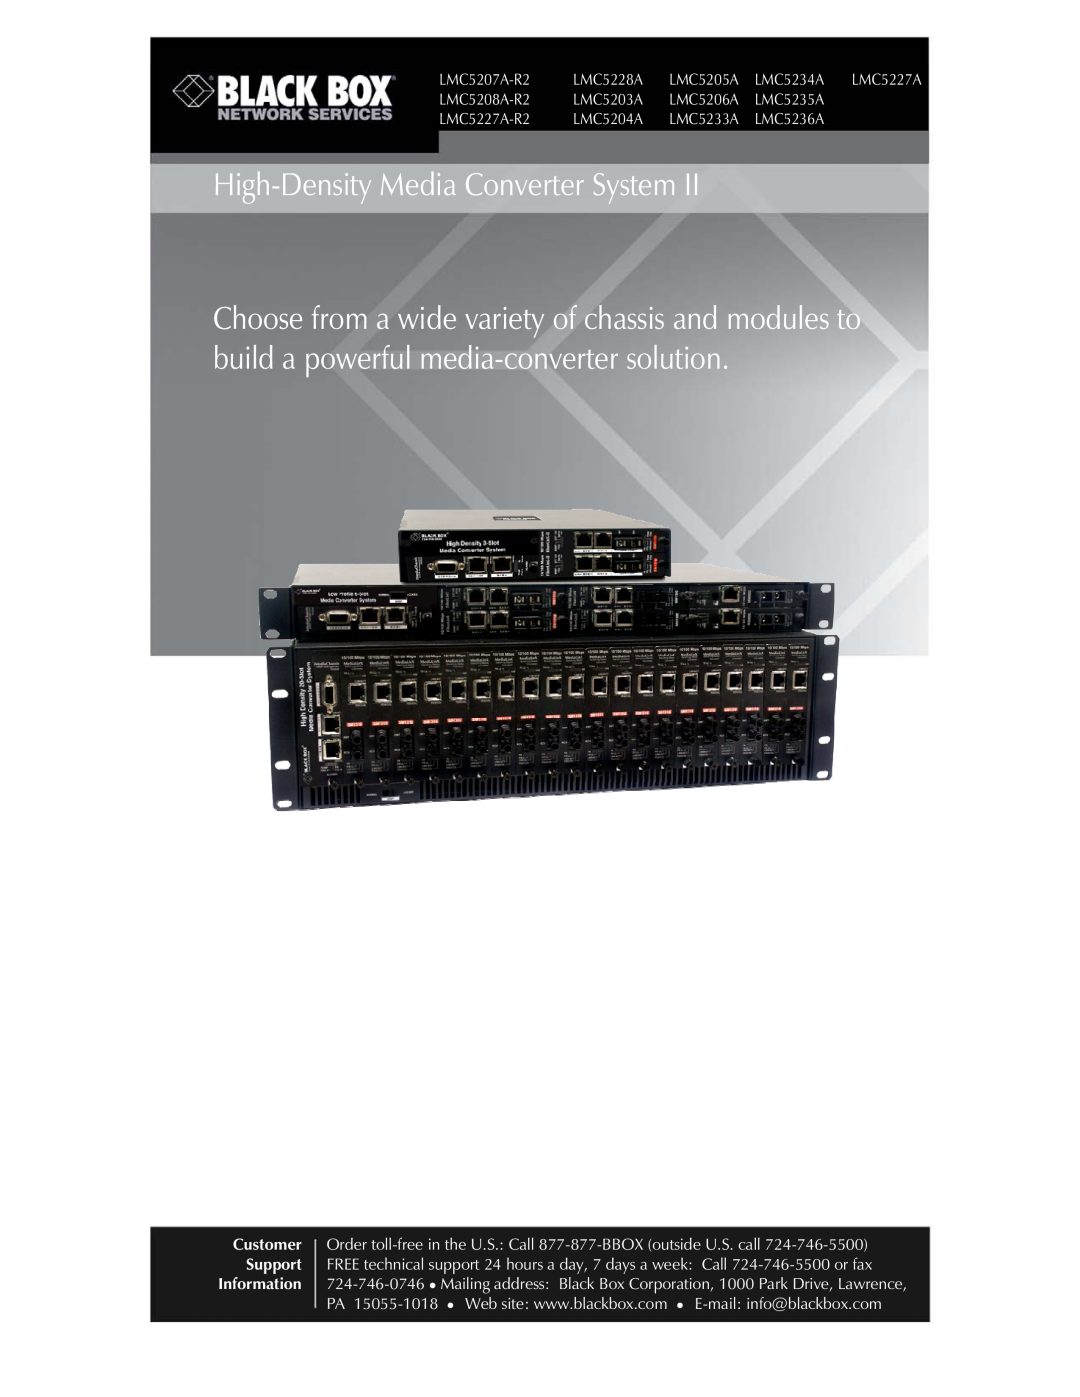 Black Box LMC5207A-R2, LMC5208A-R2, LMC5206A manual High-Density Media Converter System, Customer, Support, Information 